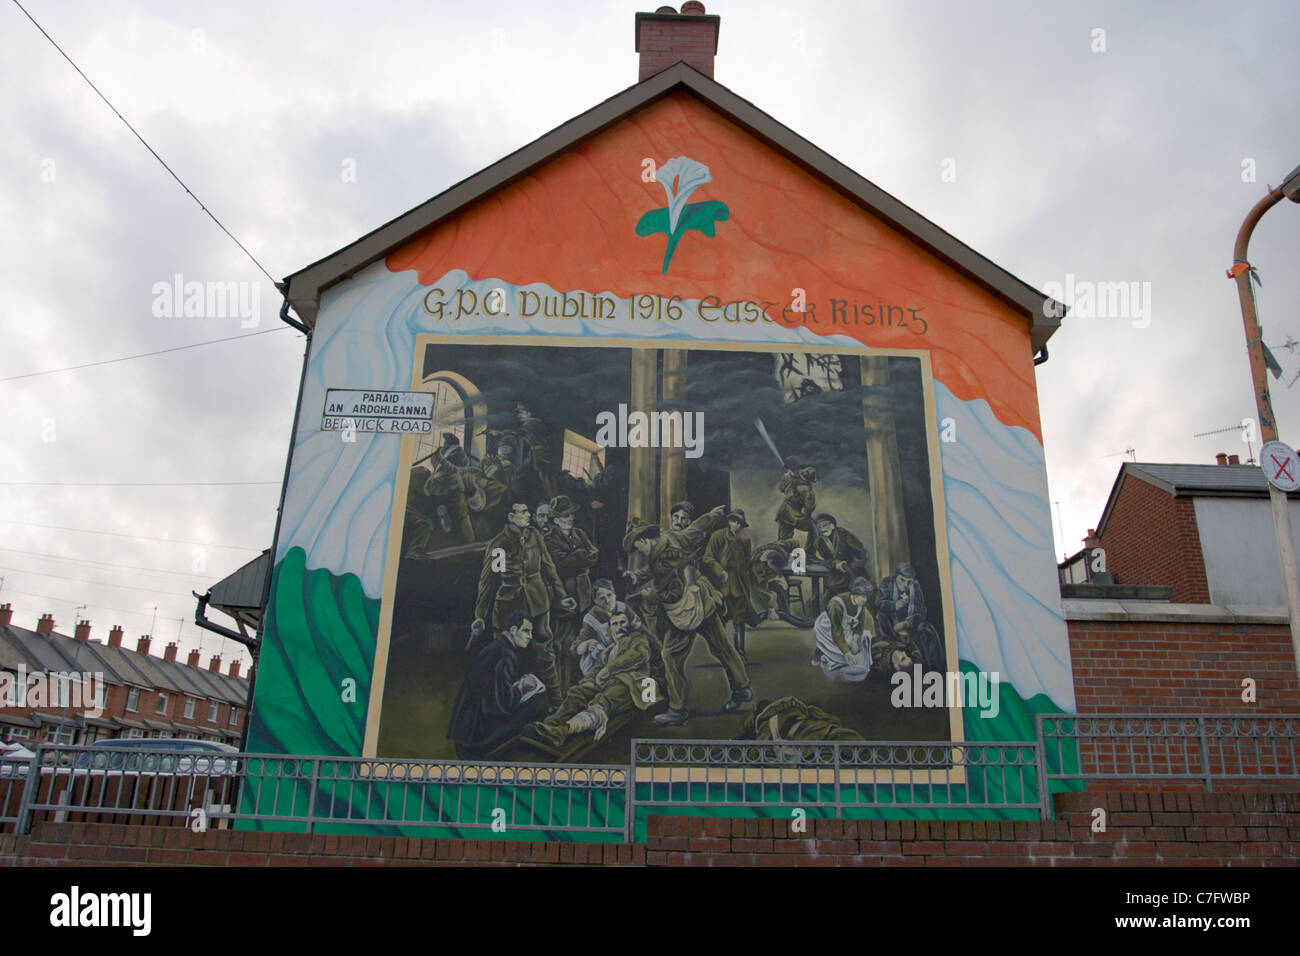 Gpo 1916 Dubliner Osteraufstand republikanischen Wand Wandmalerei ardoyne North Belfast Nordirland ni Stockfoto